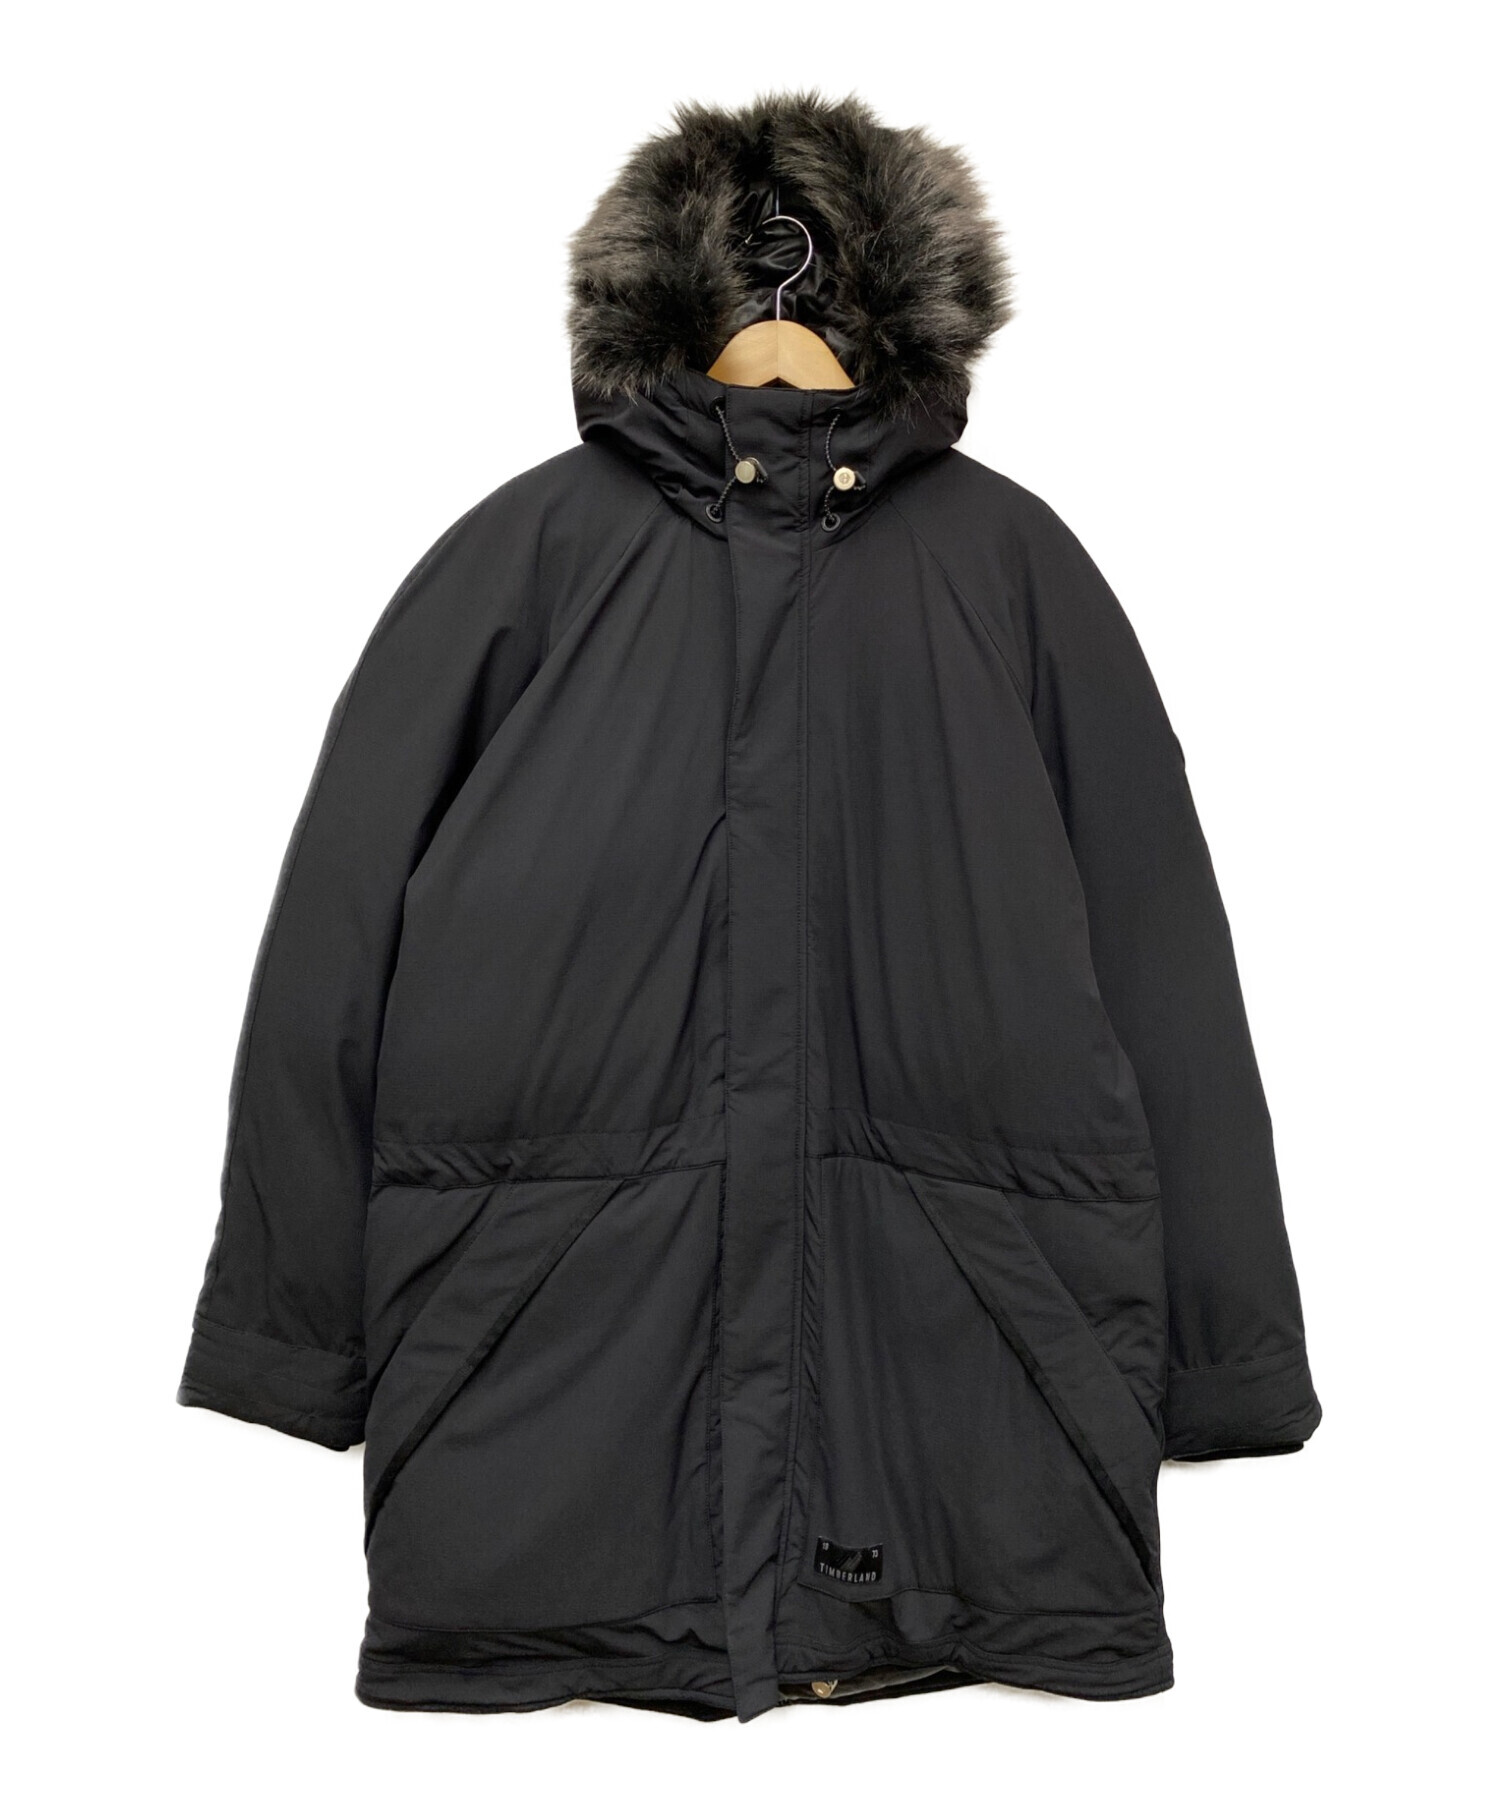 Timberland (ティンバーランド) ダウンジャケット ブラック サイズ:XL